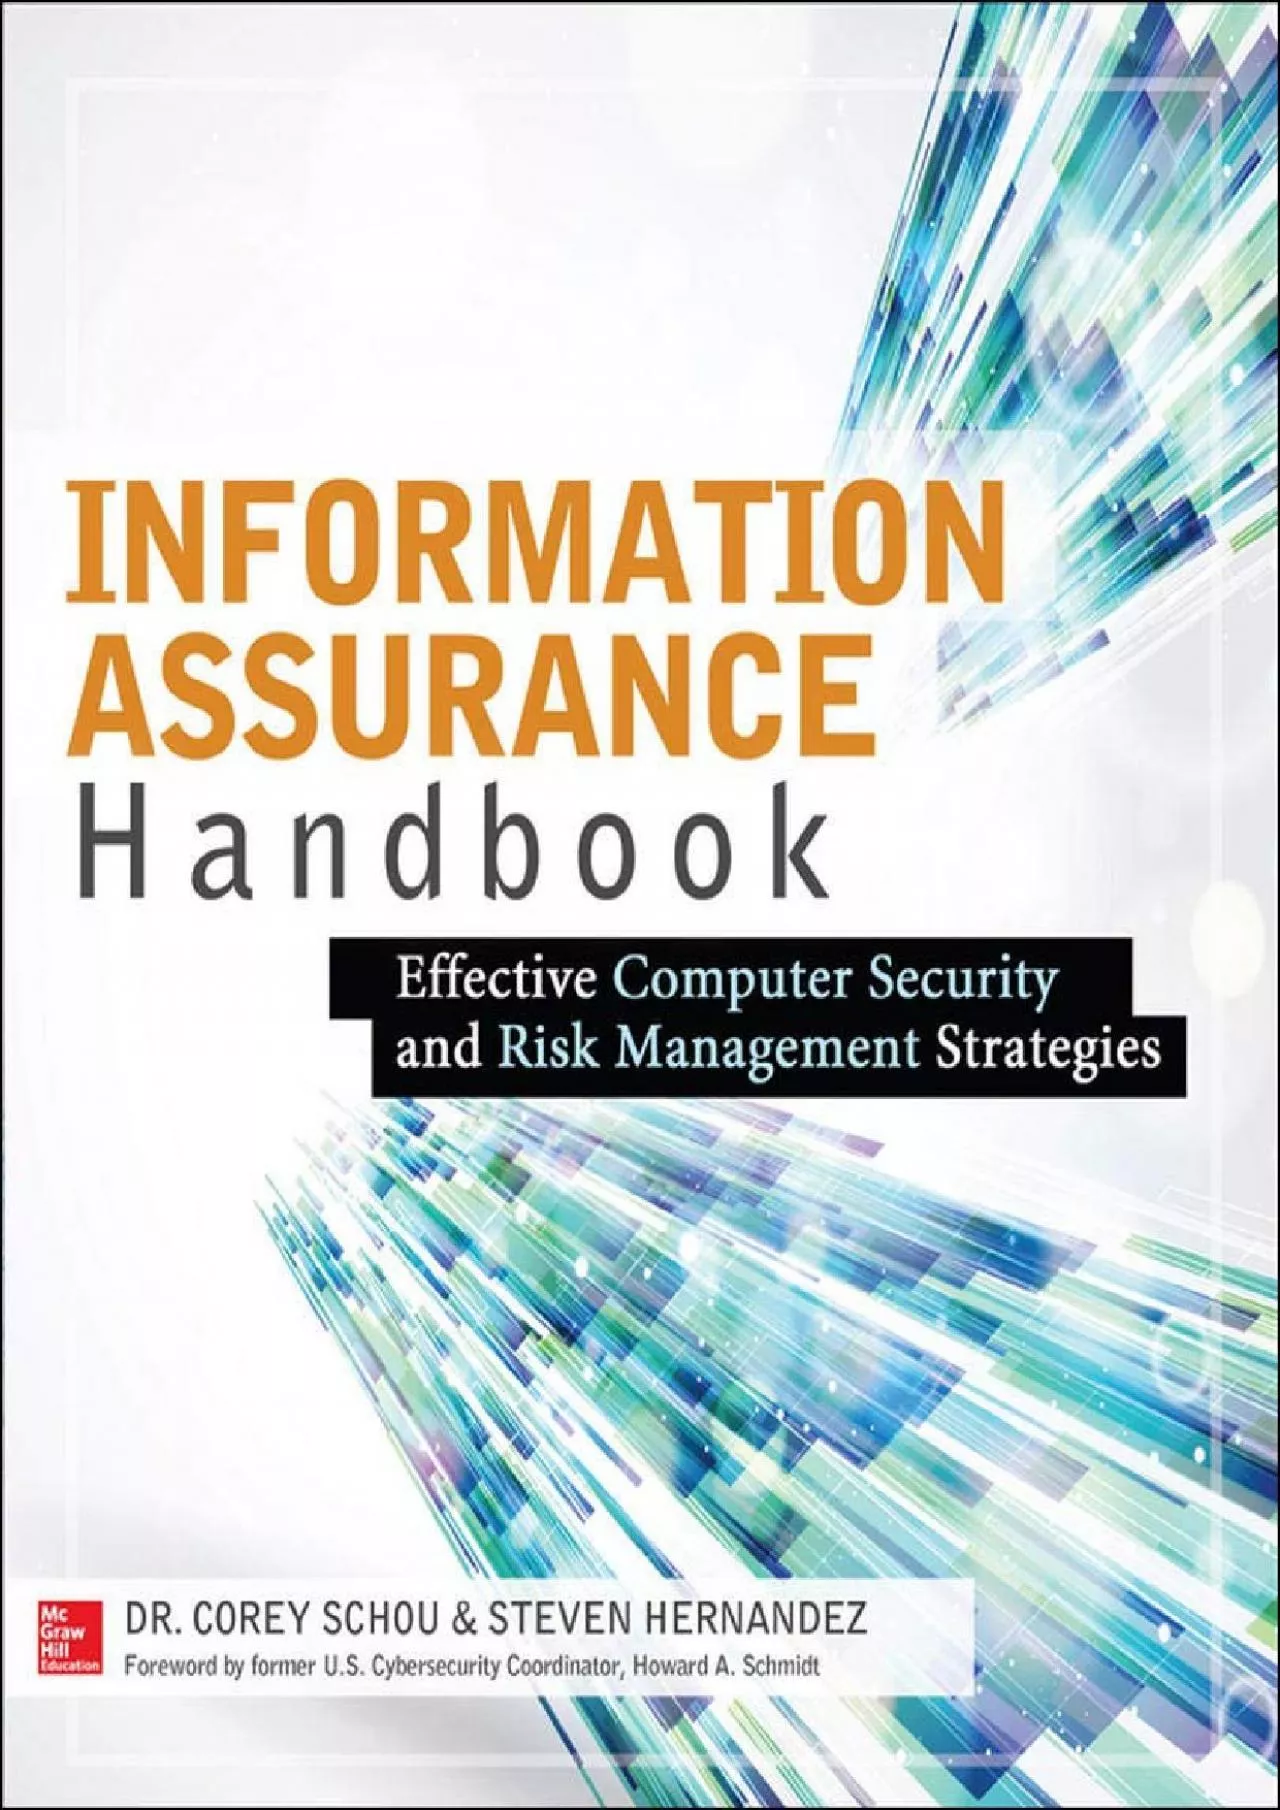 (BOOS)-Information Assurance Handbook: Effective Computer Security and Risk Management